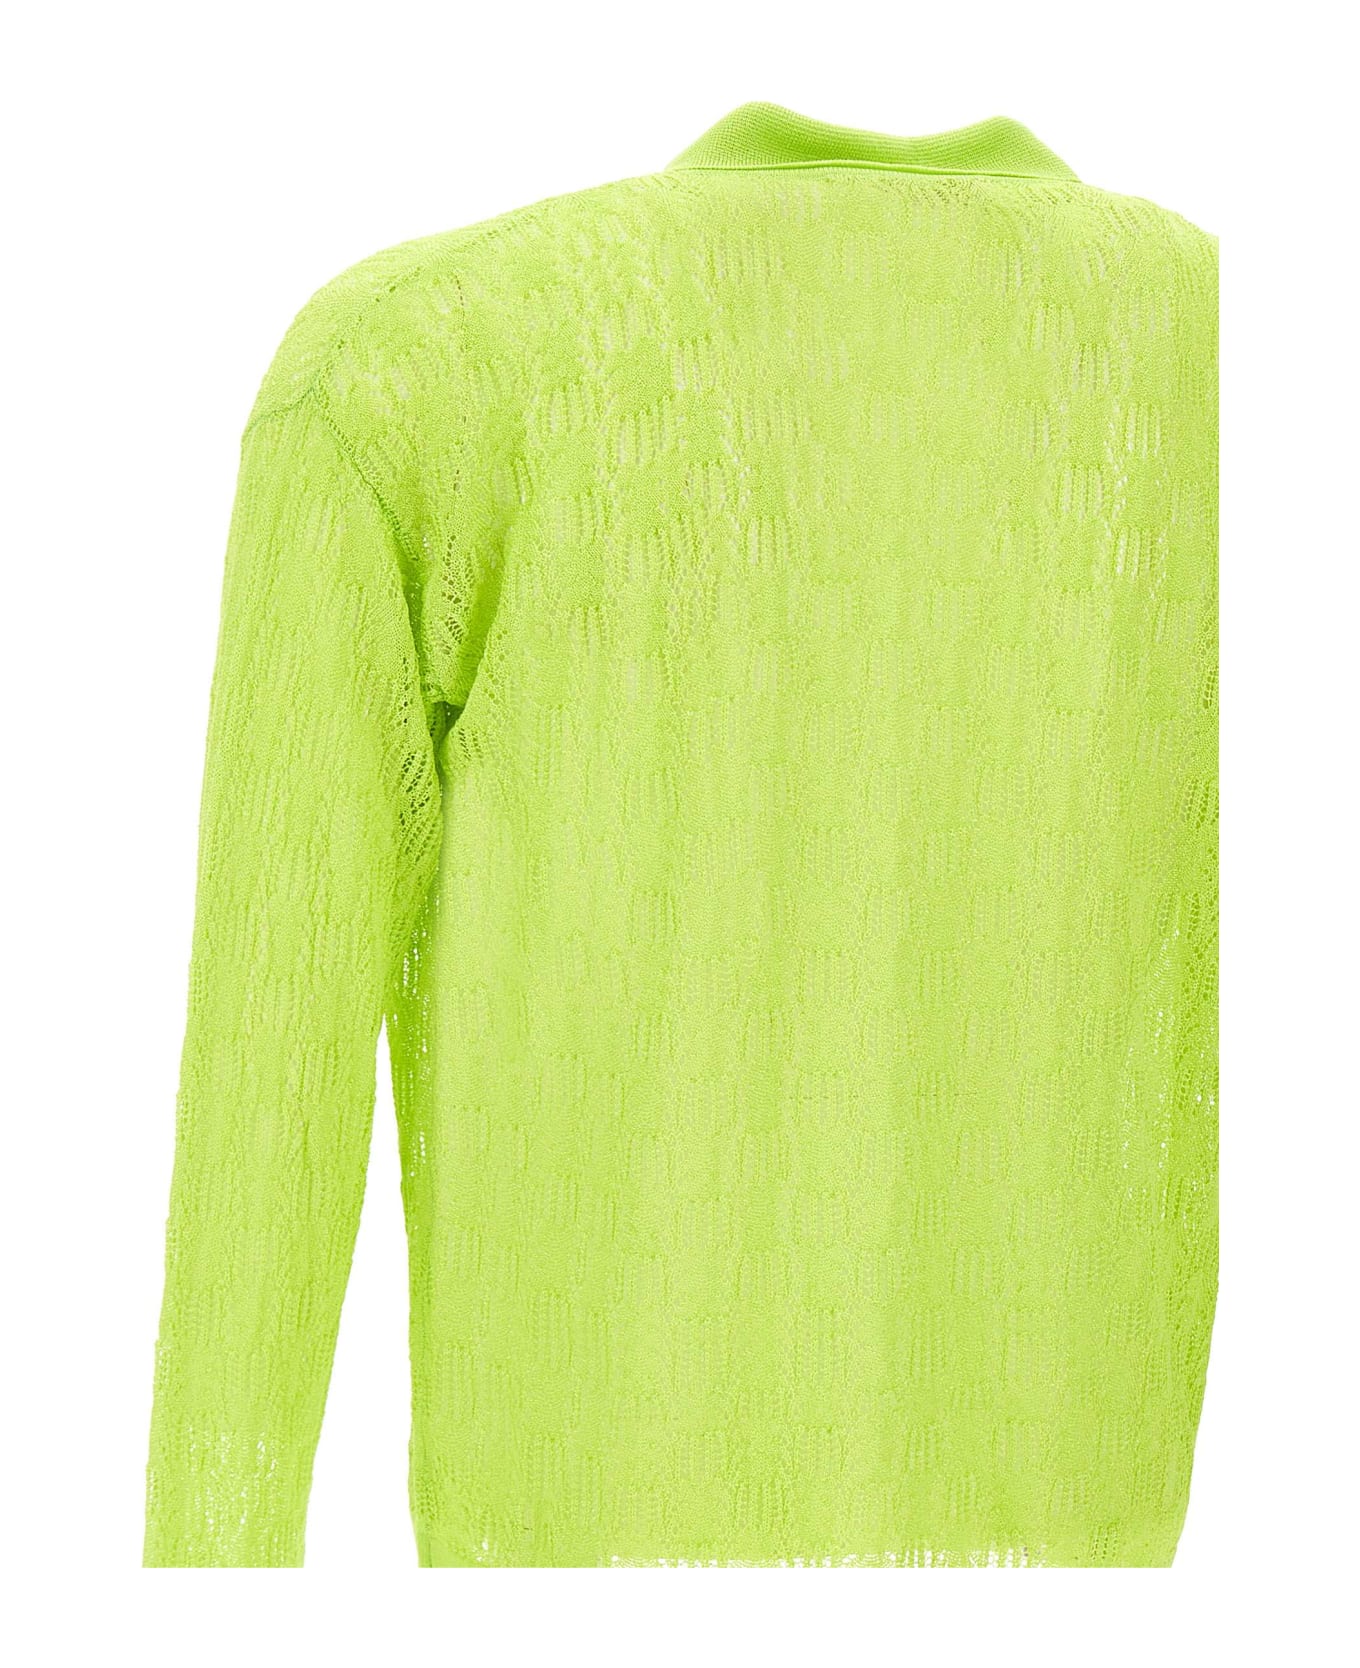 Bonsai Polo Shirt - Acid Green